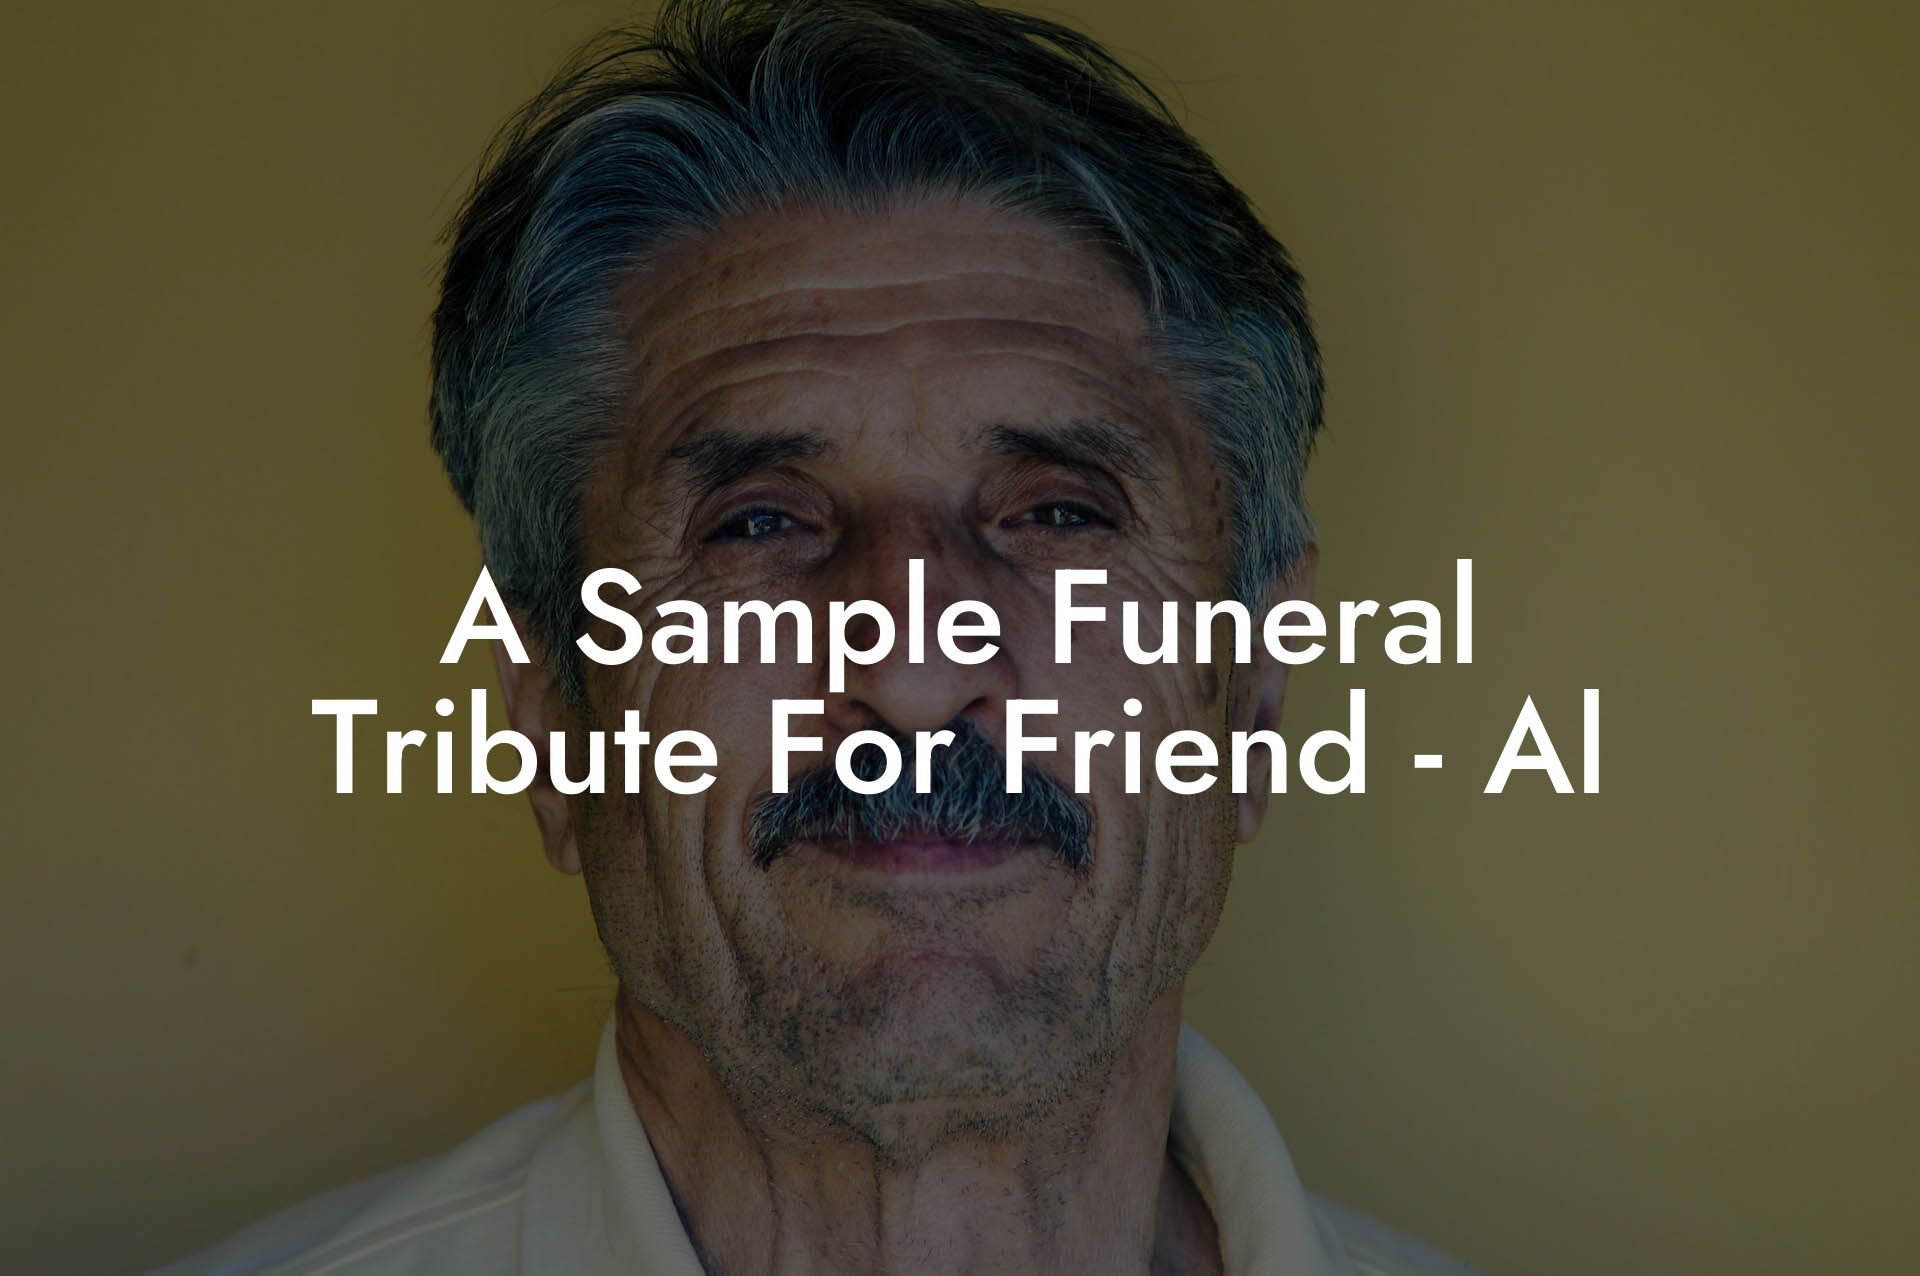 A Sample Funeral Tribute For Friend - Al